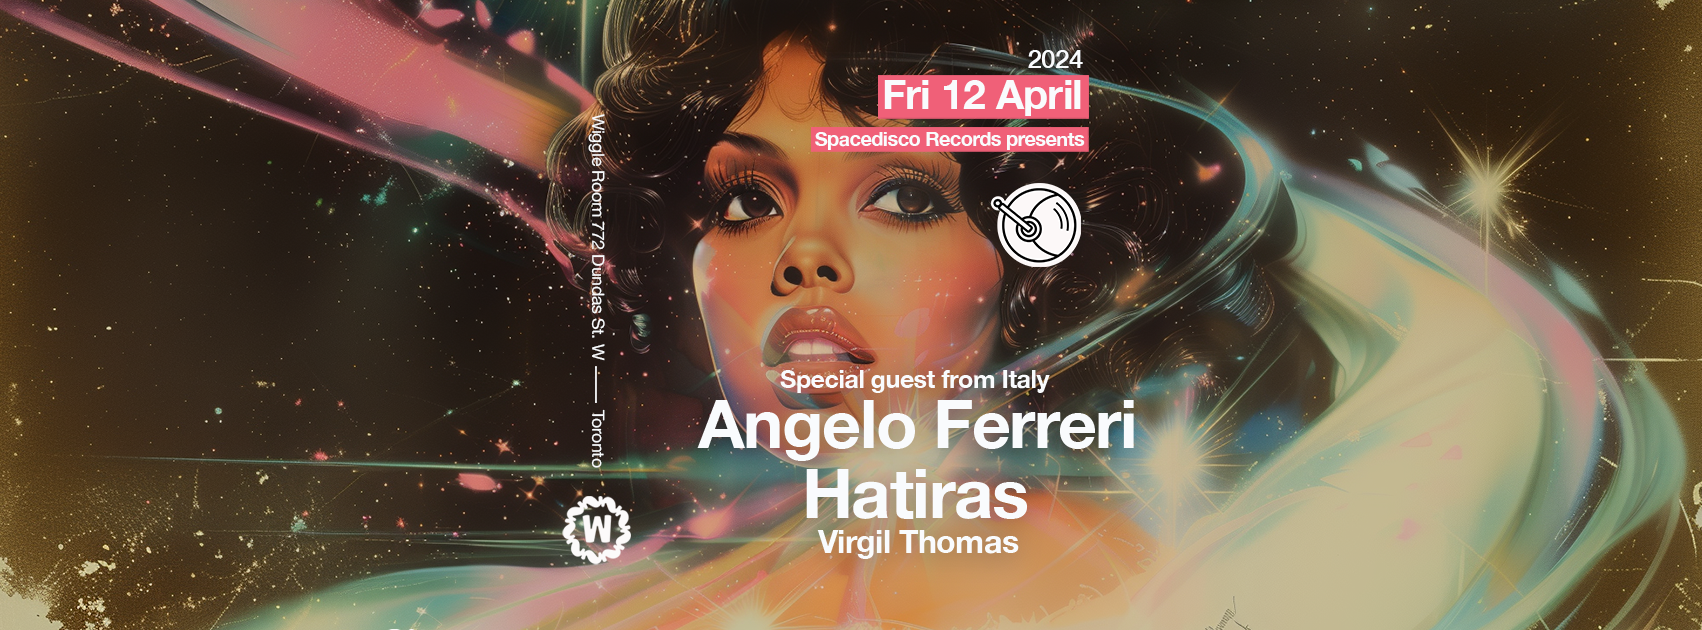 Angelo Ferreri + Hatiras Spacedisco Records April 12 - フライヤー裏